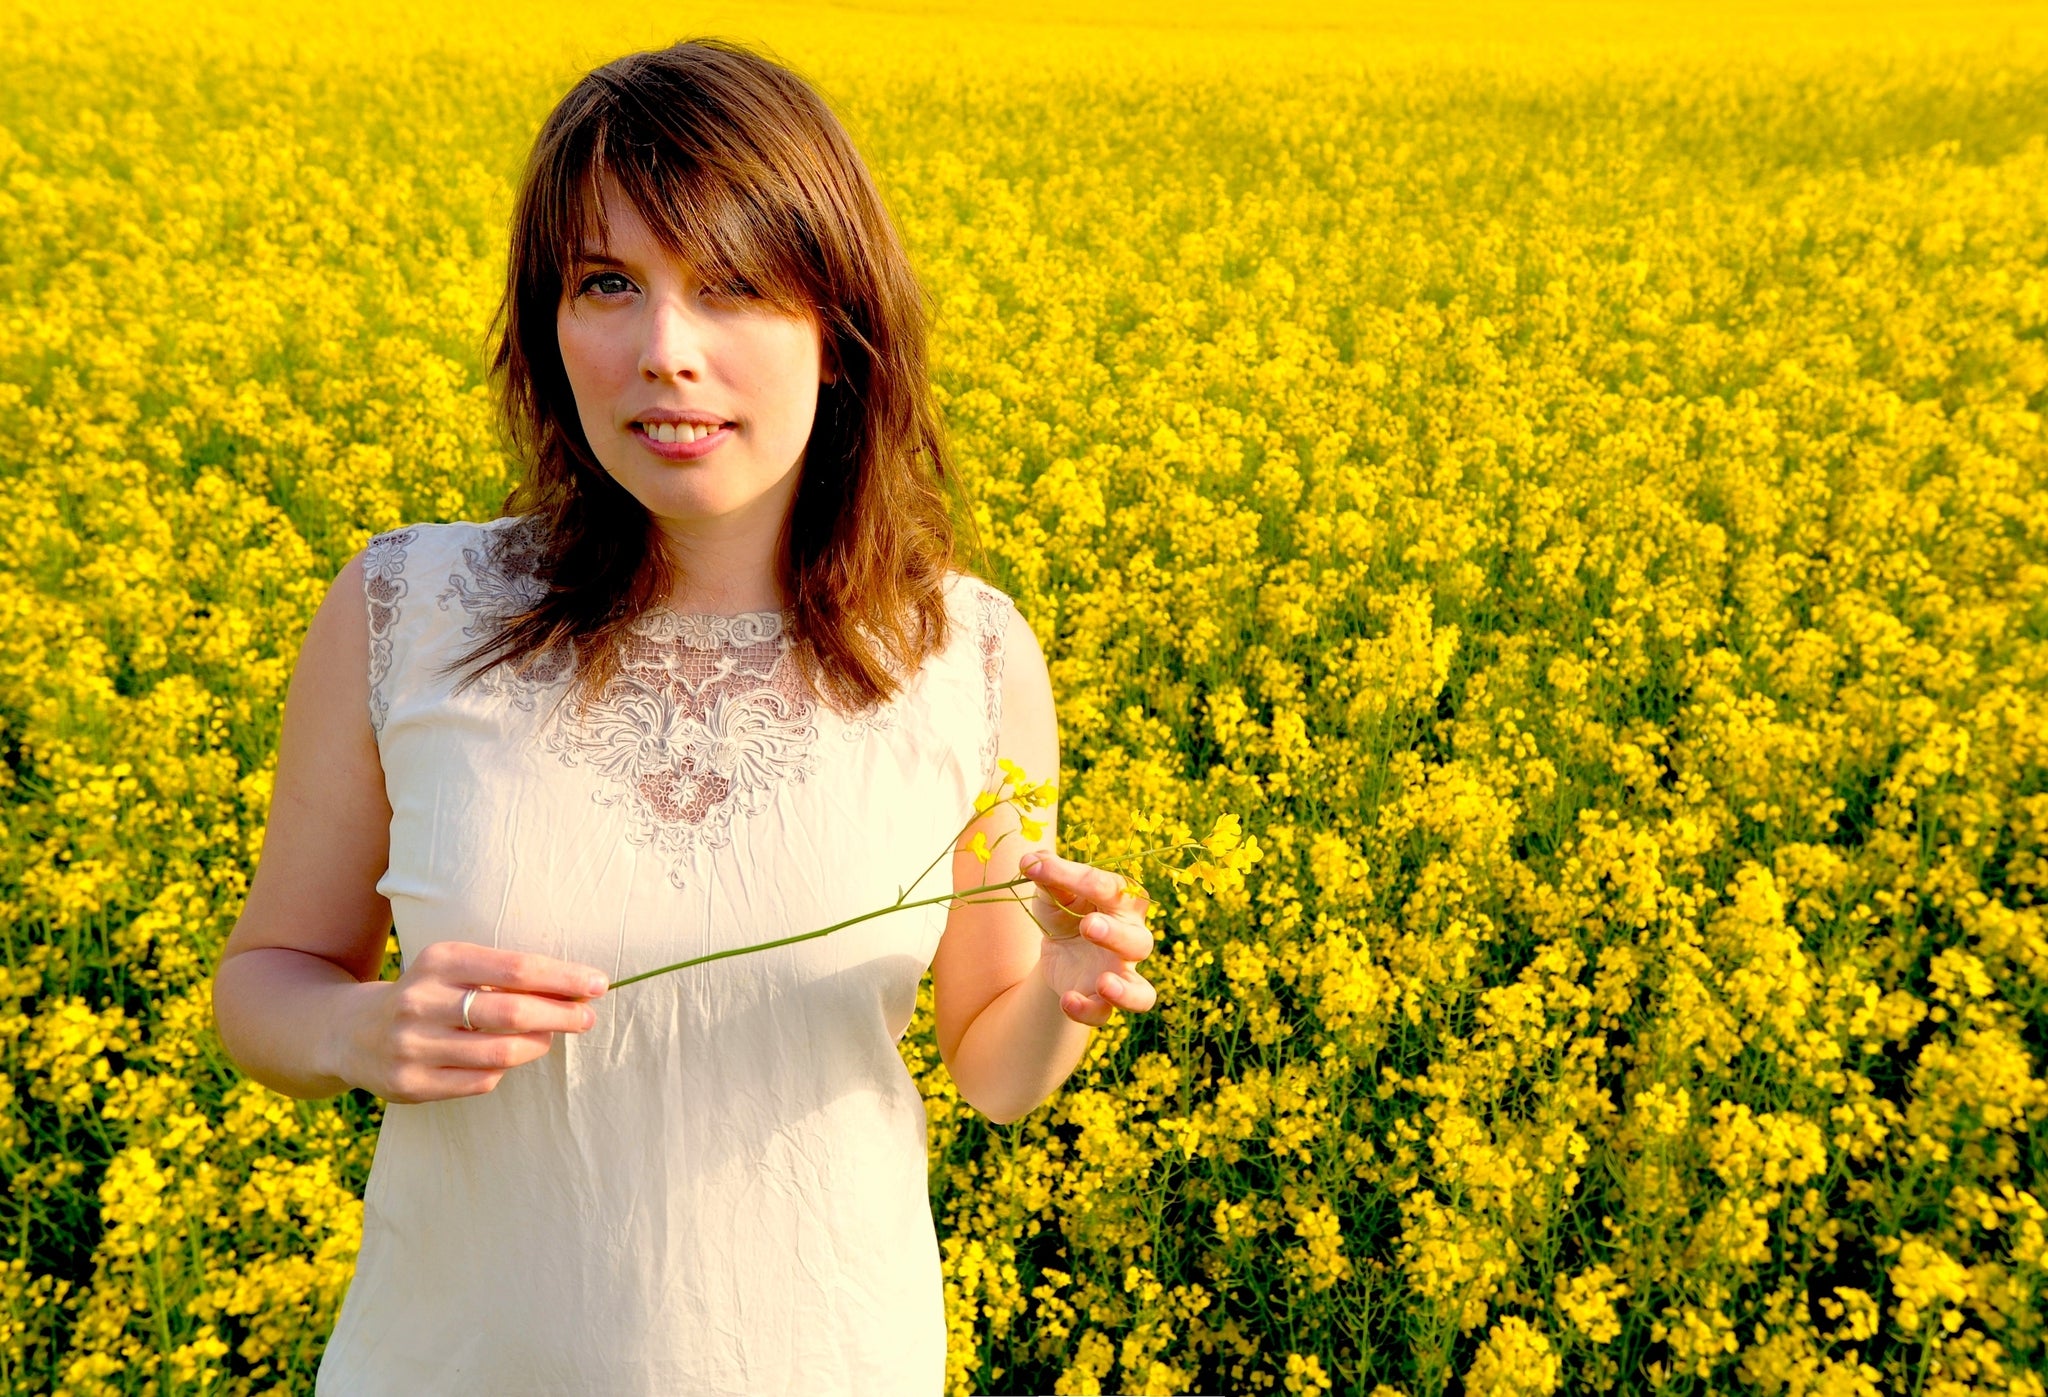 Spotlight England showcases six English folk artists, including Bella Hardy